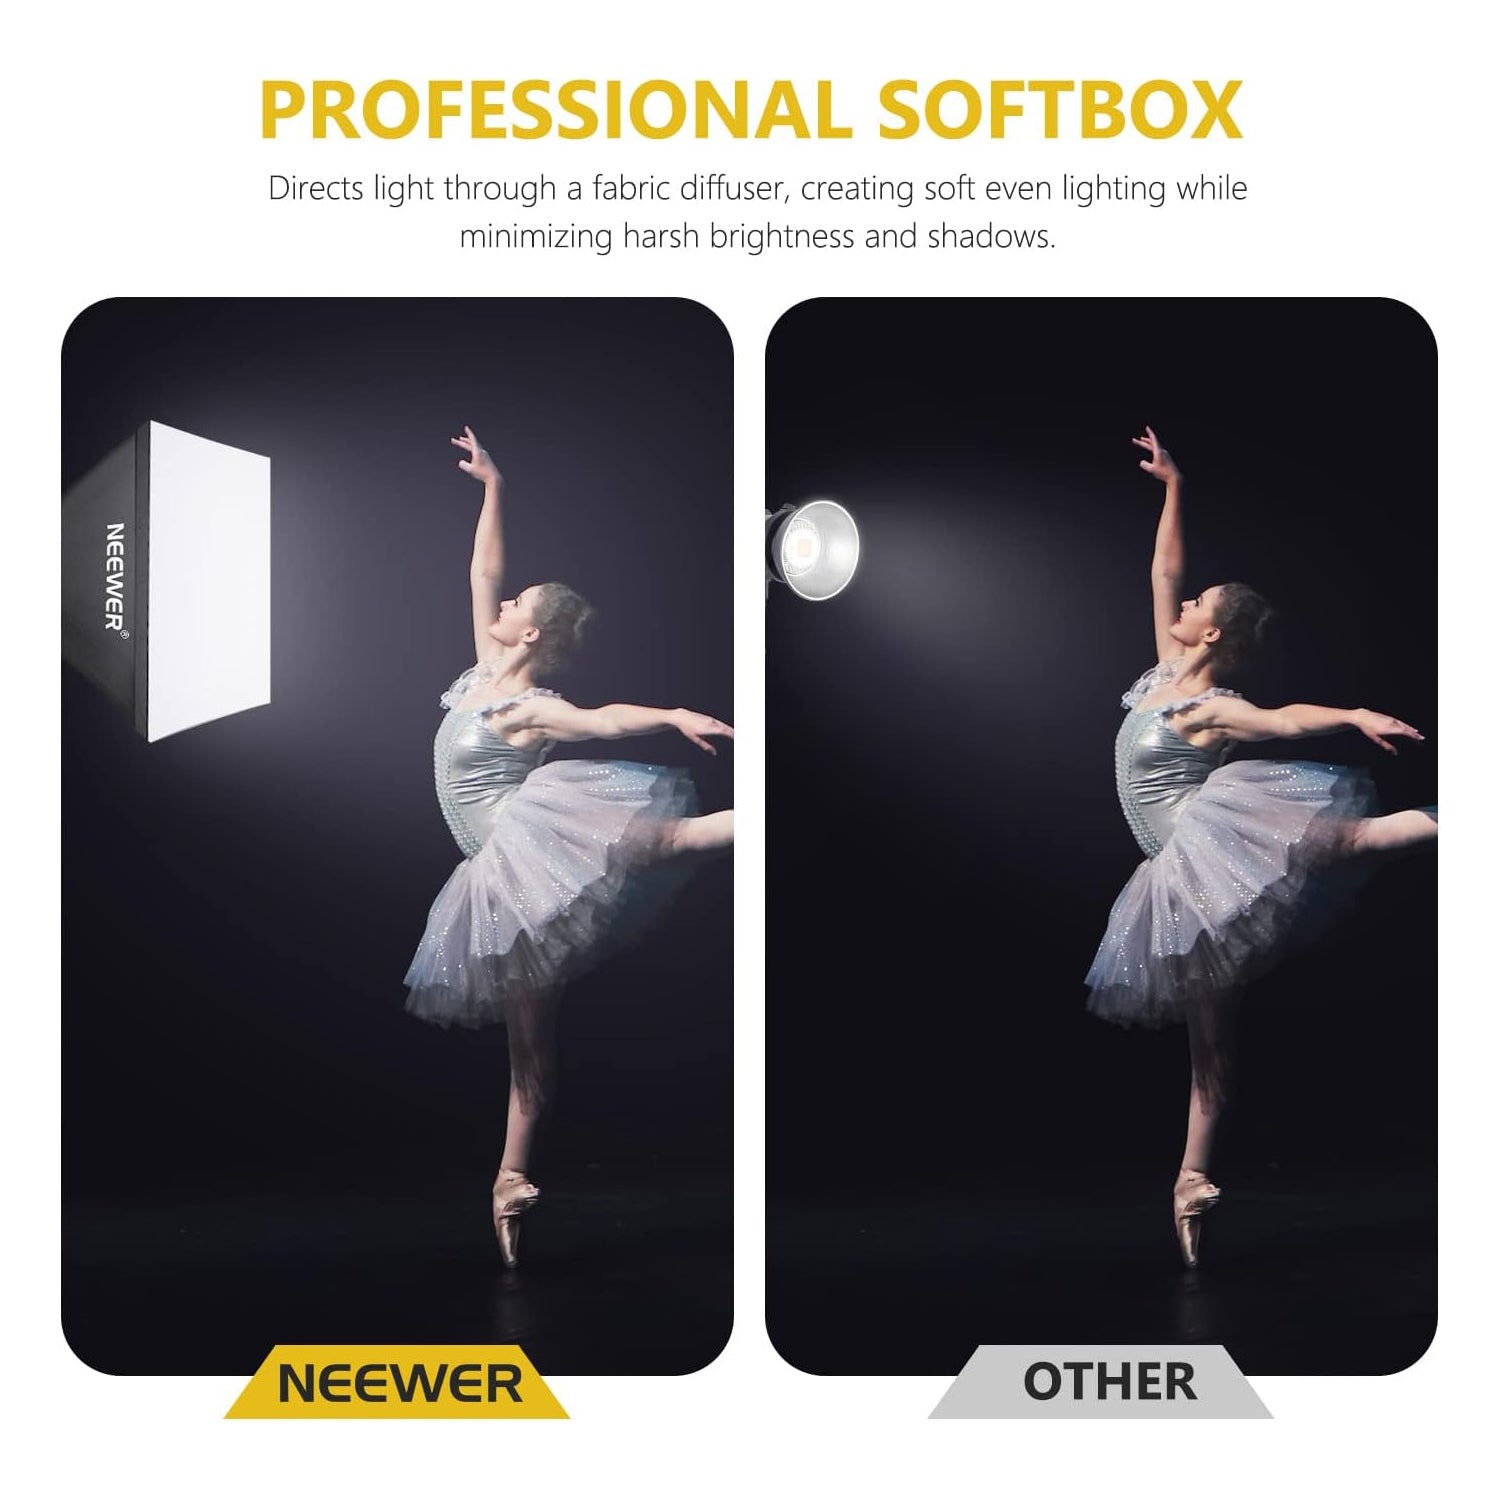 NEEWER 24x24/60x60CM 700W Photography Softbox Kit